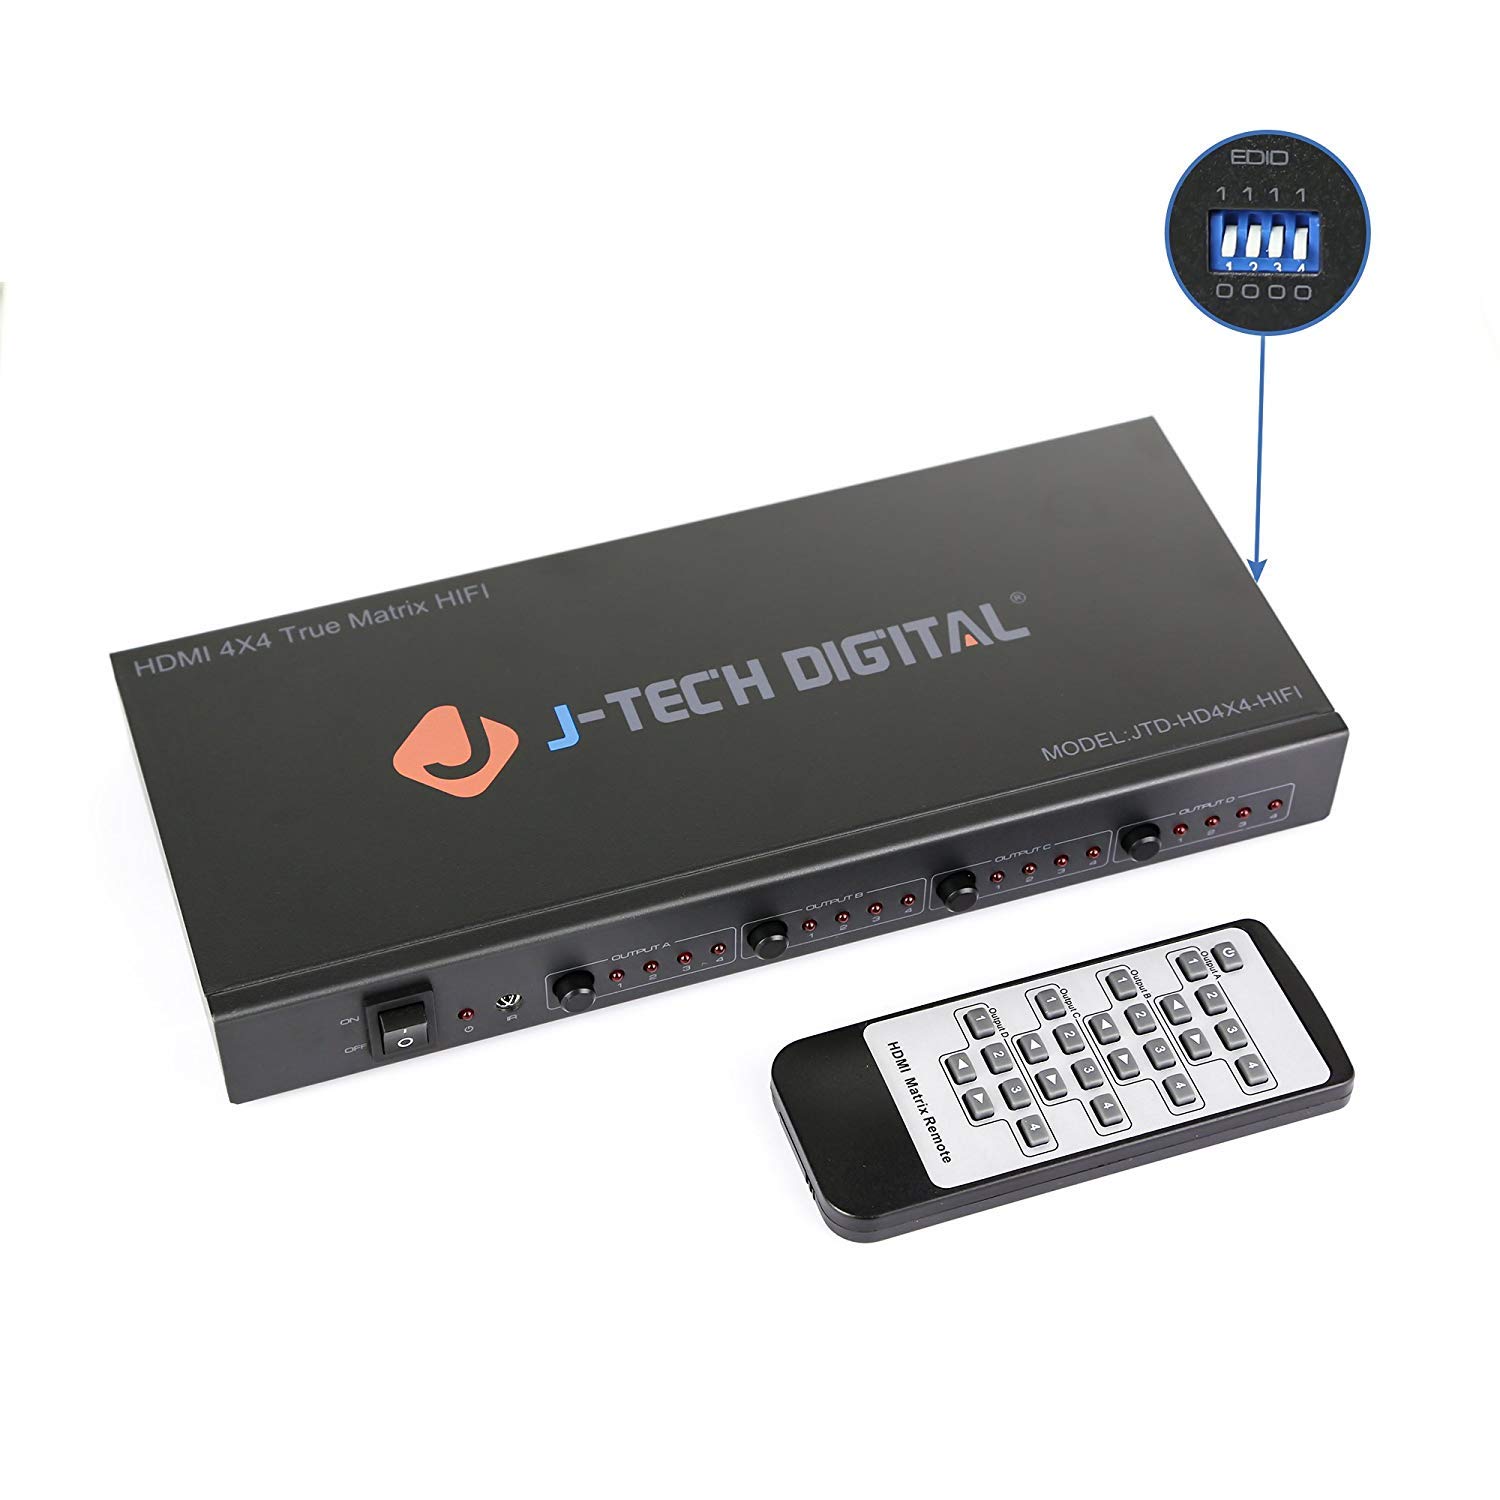 tooth Tremendous Professor HDMI 4X4 Matrix 4K@30Hz Control4 Driver Available - J-Tech Digital